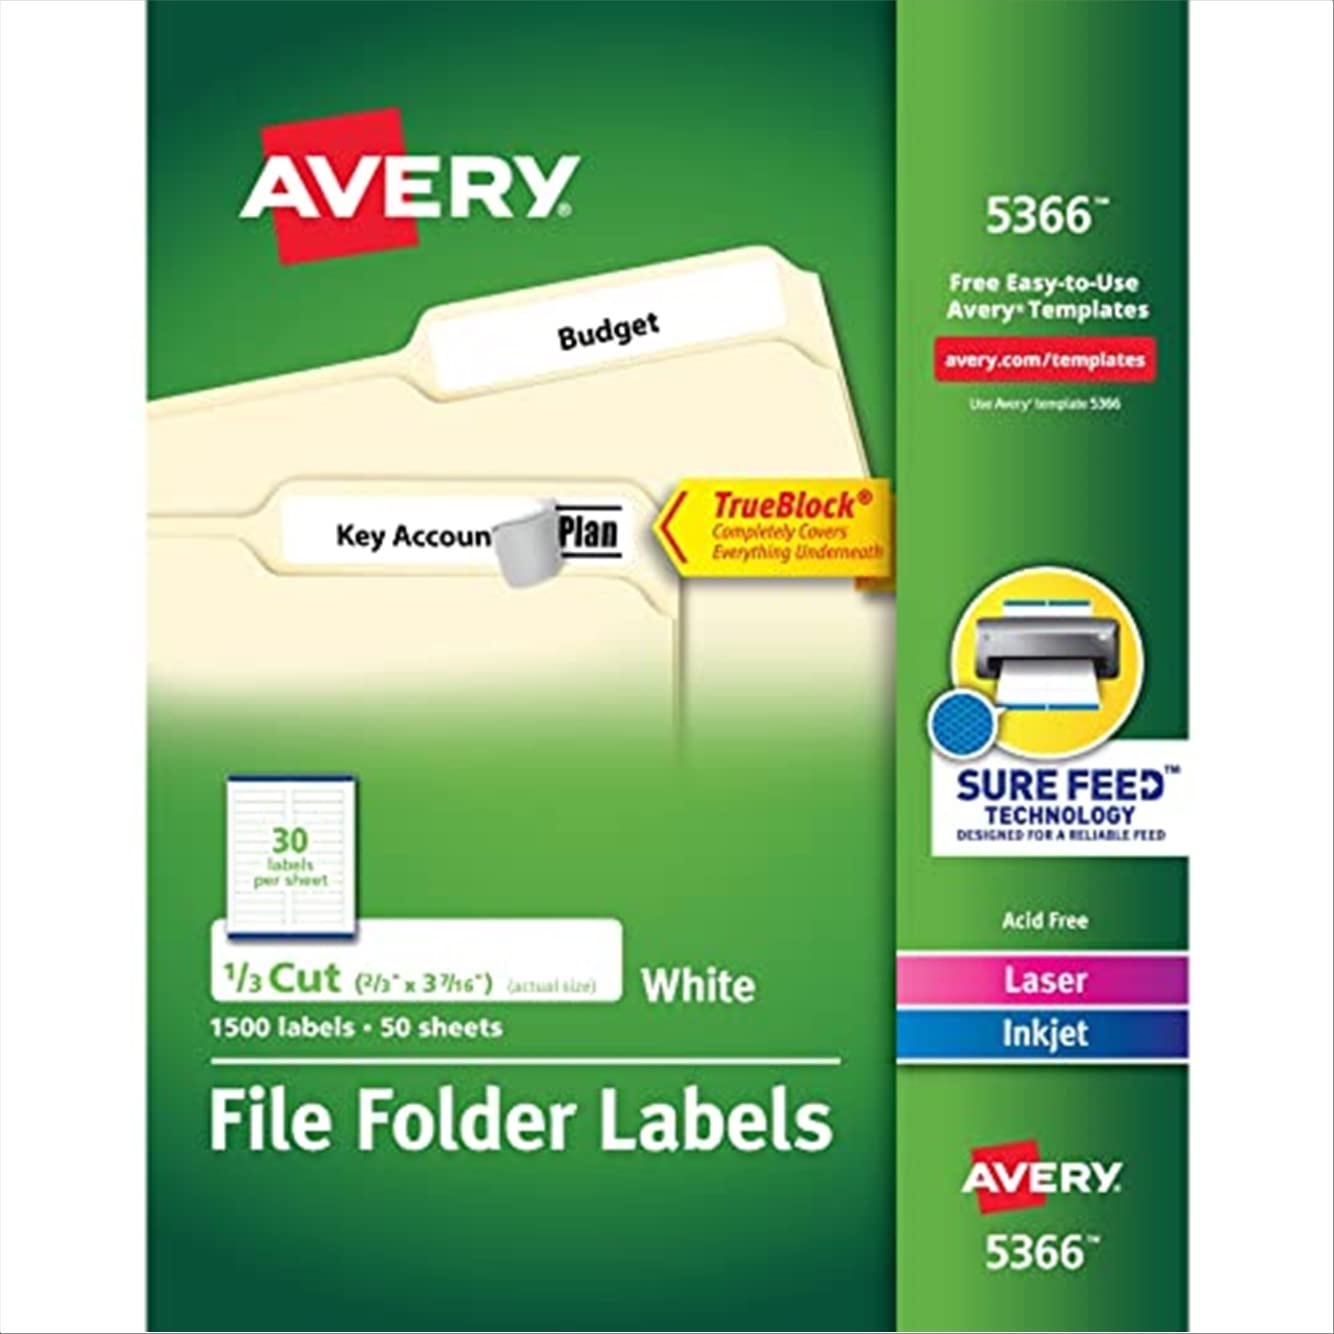 Avery ملصقات مجلد الملفات لطابعات الليزر والطابعات النافثة للحبر بتقنية TrueBlock